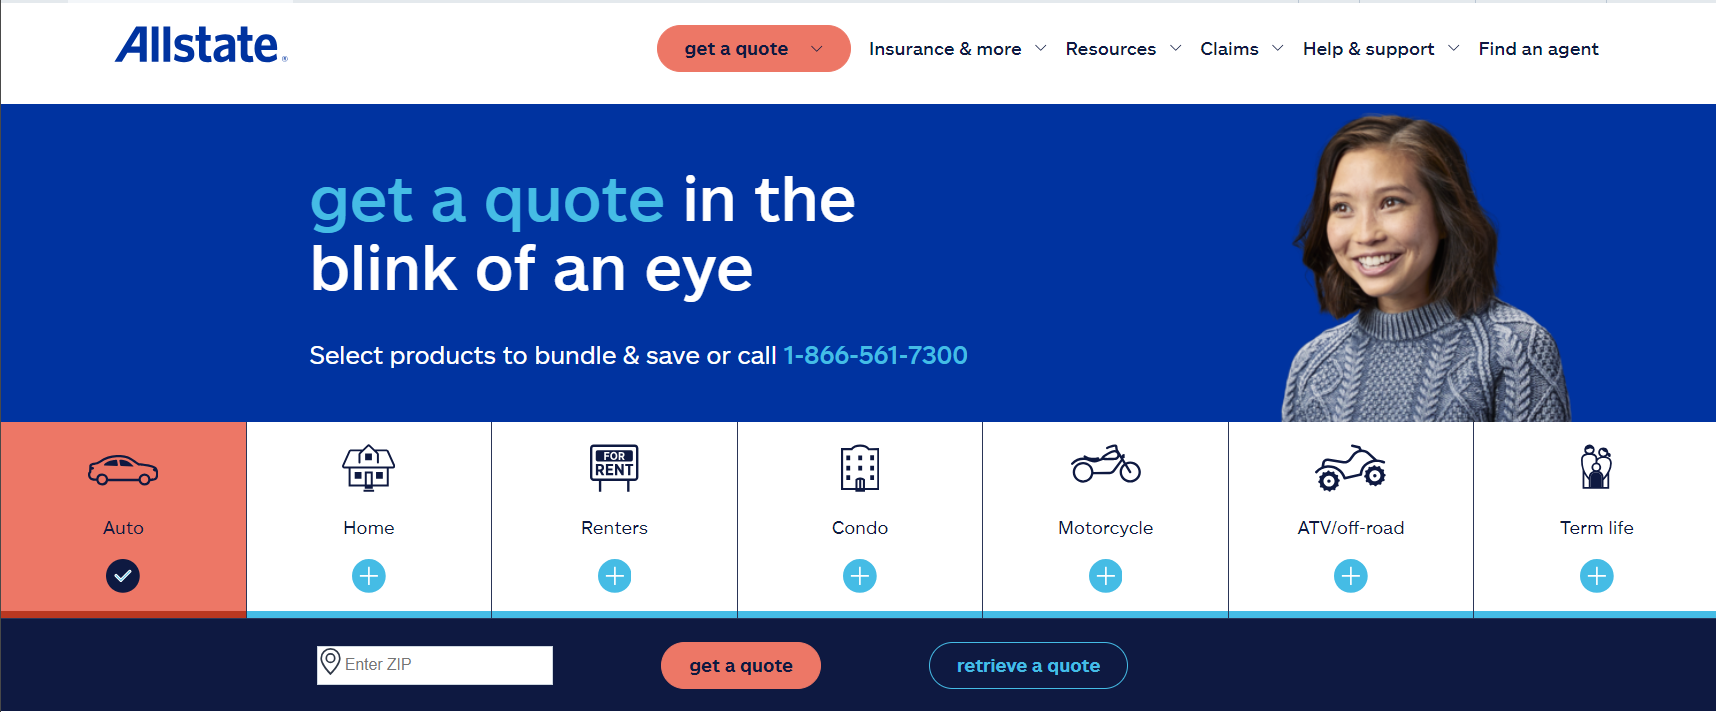 Allstate Homepage: Cheap Ram C/V Car Insurance